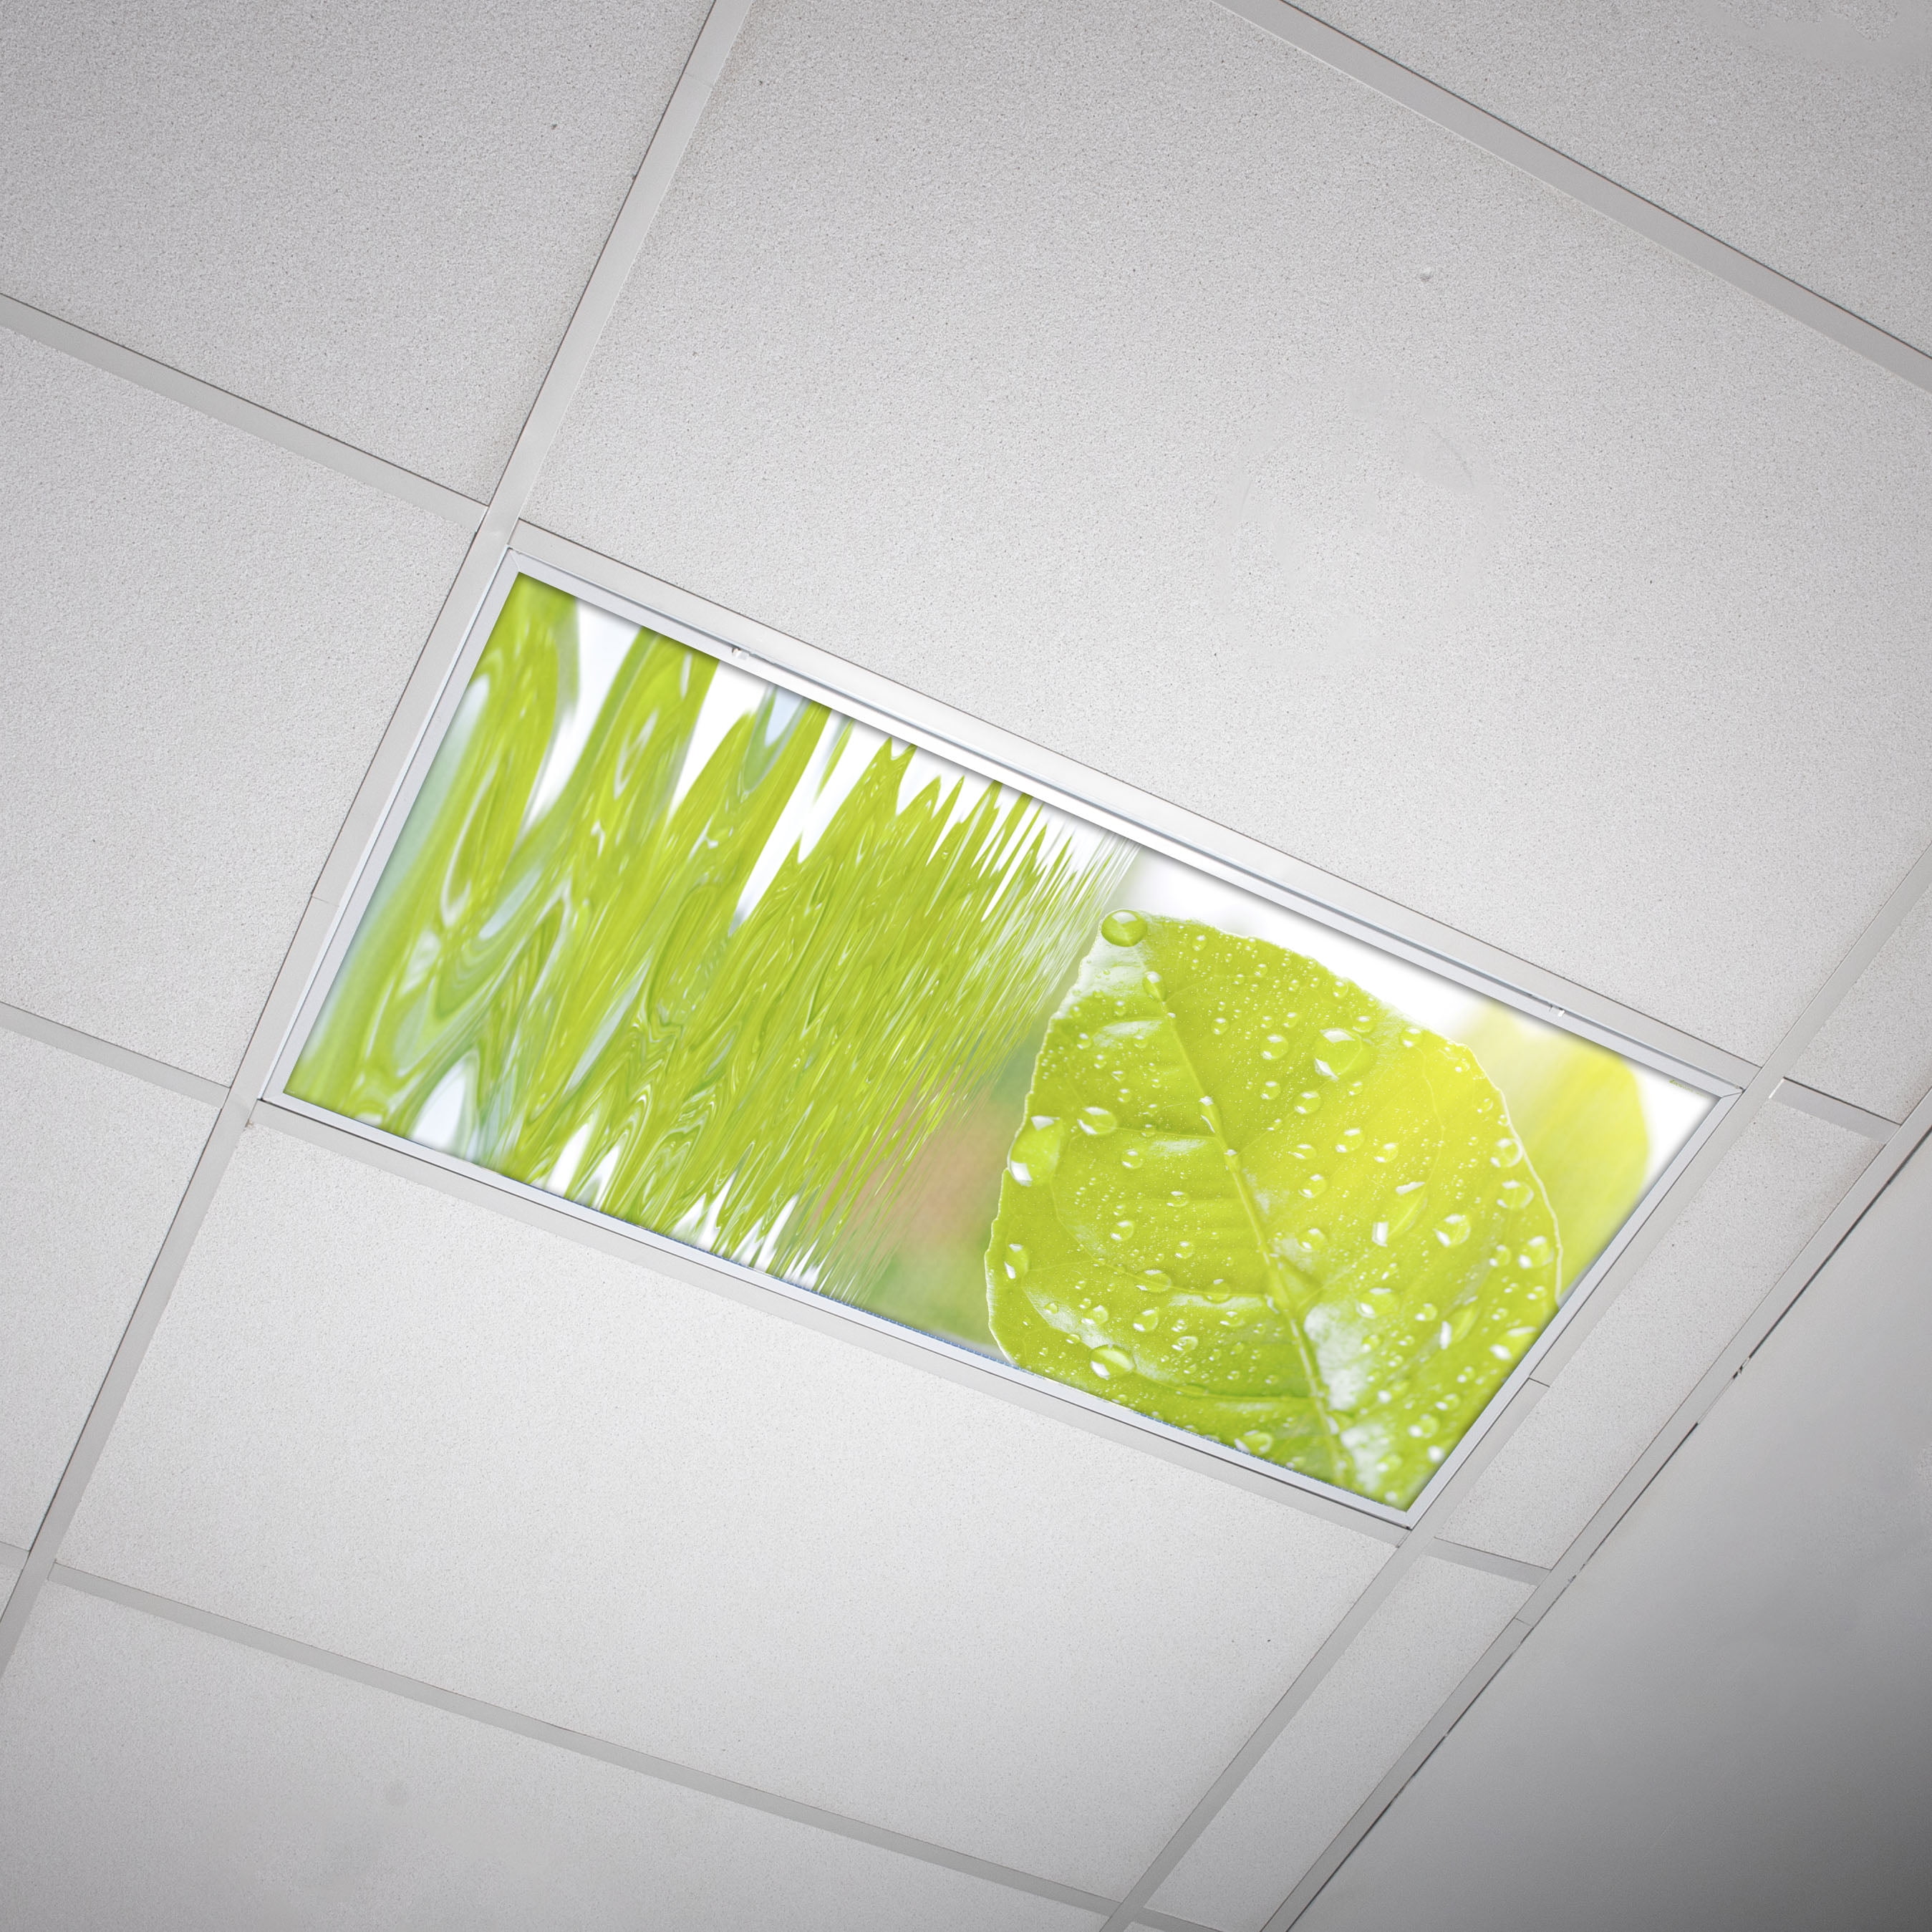 Octo Lights Fluorescent Light Covers 2x4 Flexible Decorative Light Diffuser Panels Tree